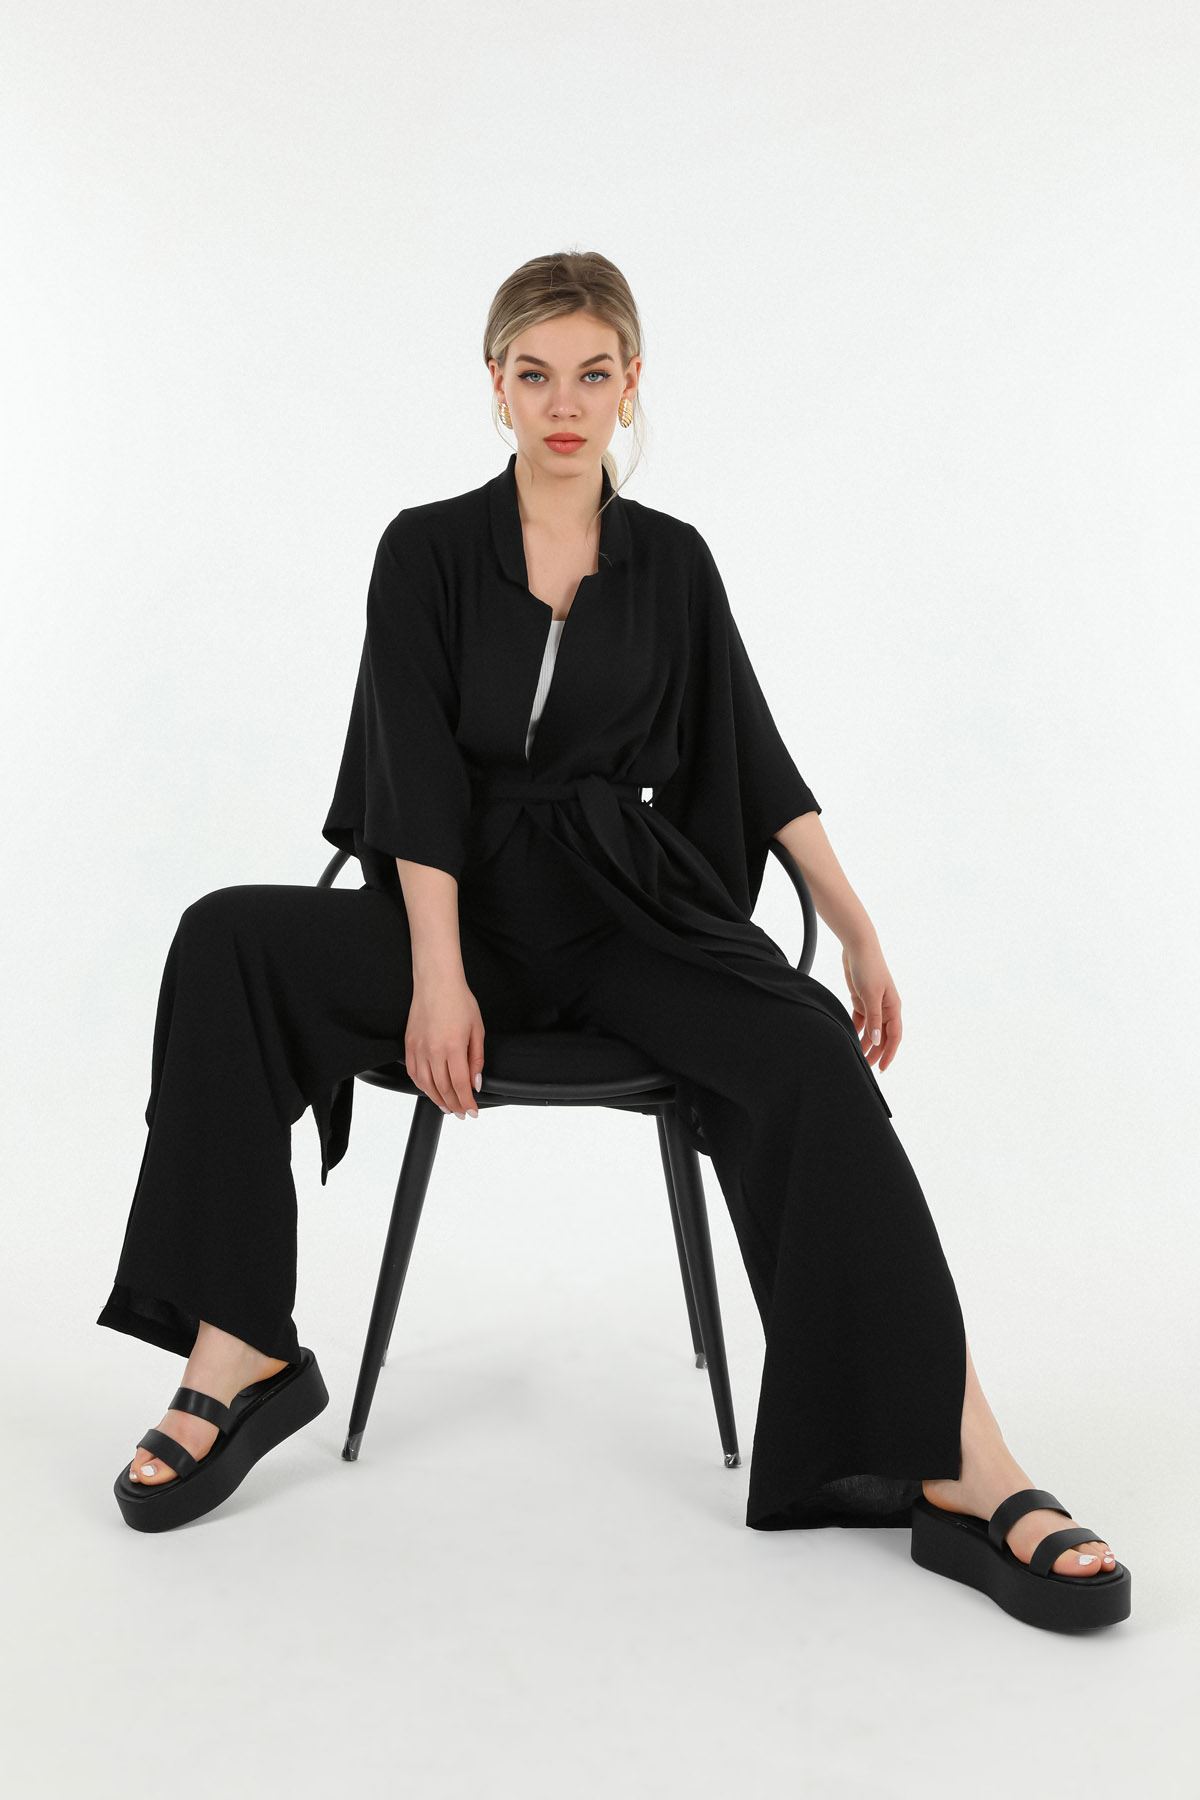 Linen Fabric Long Sleeve Revere Collar Hip Height Comfy Women Jacket - Black